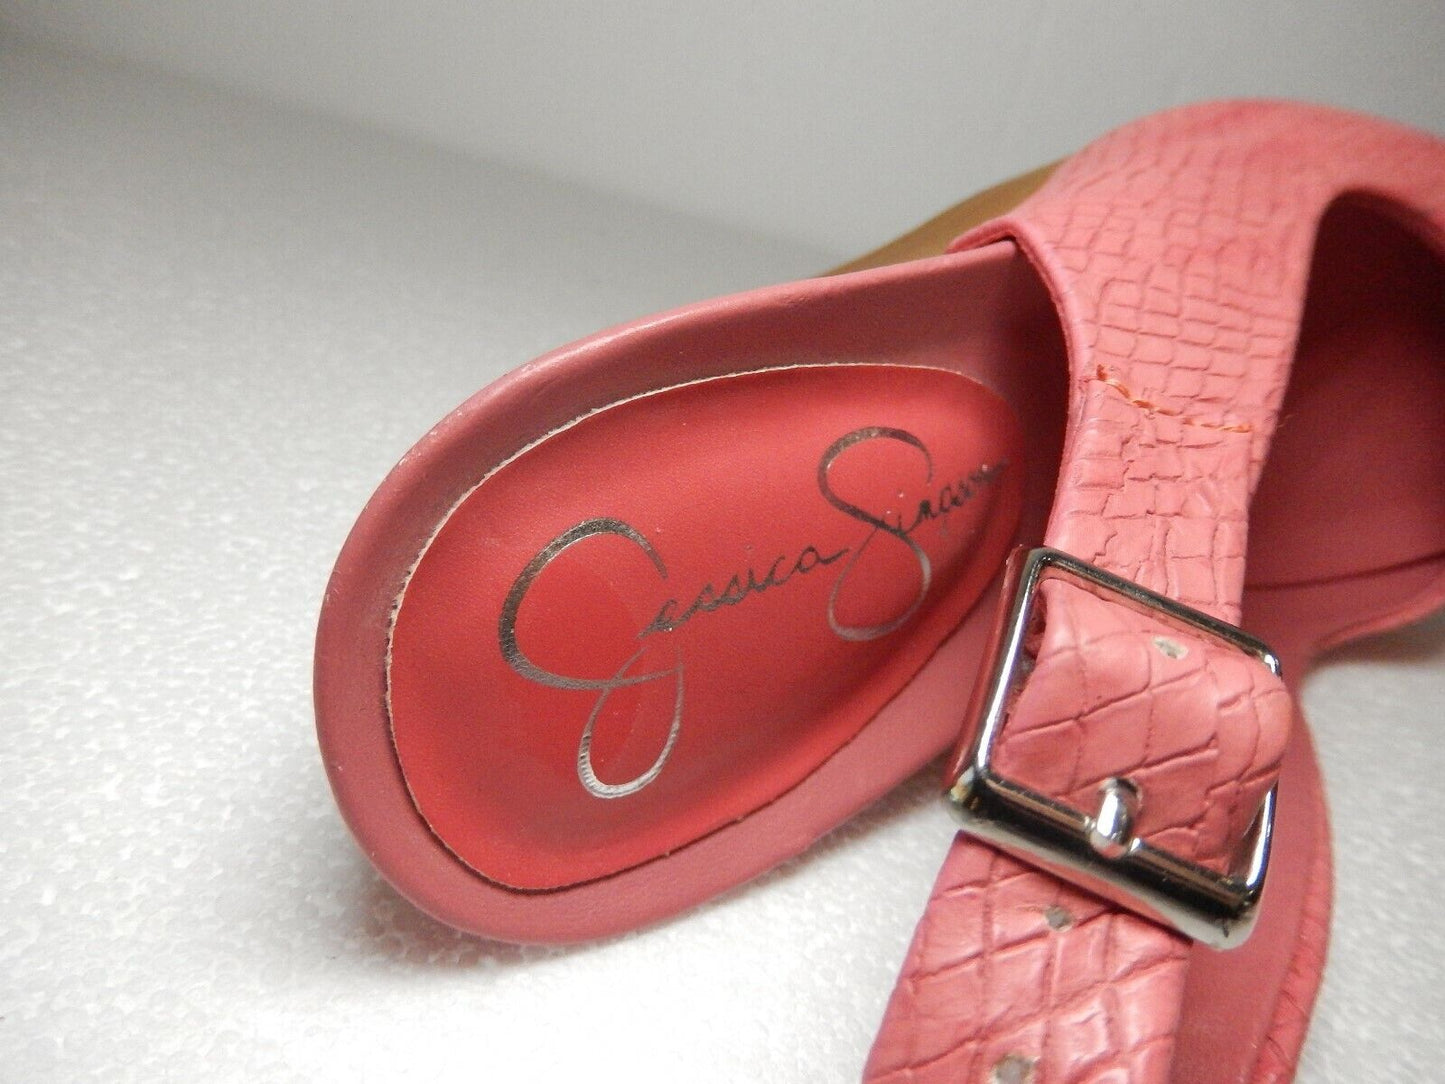 Jessica Simpson Genette Platform Pink Snakeskin Cork Sling Wedge Sandals Sz 7M